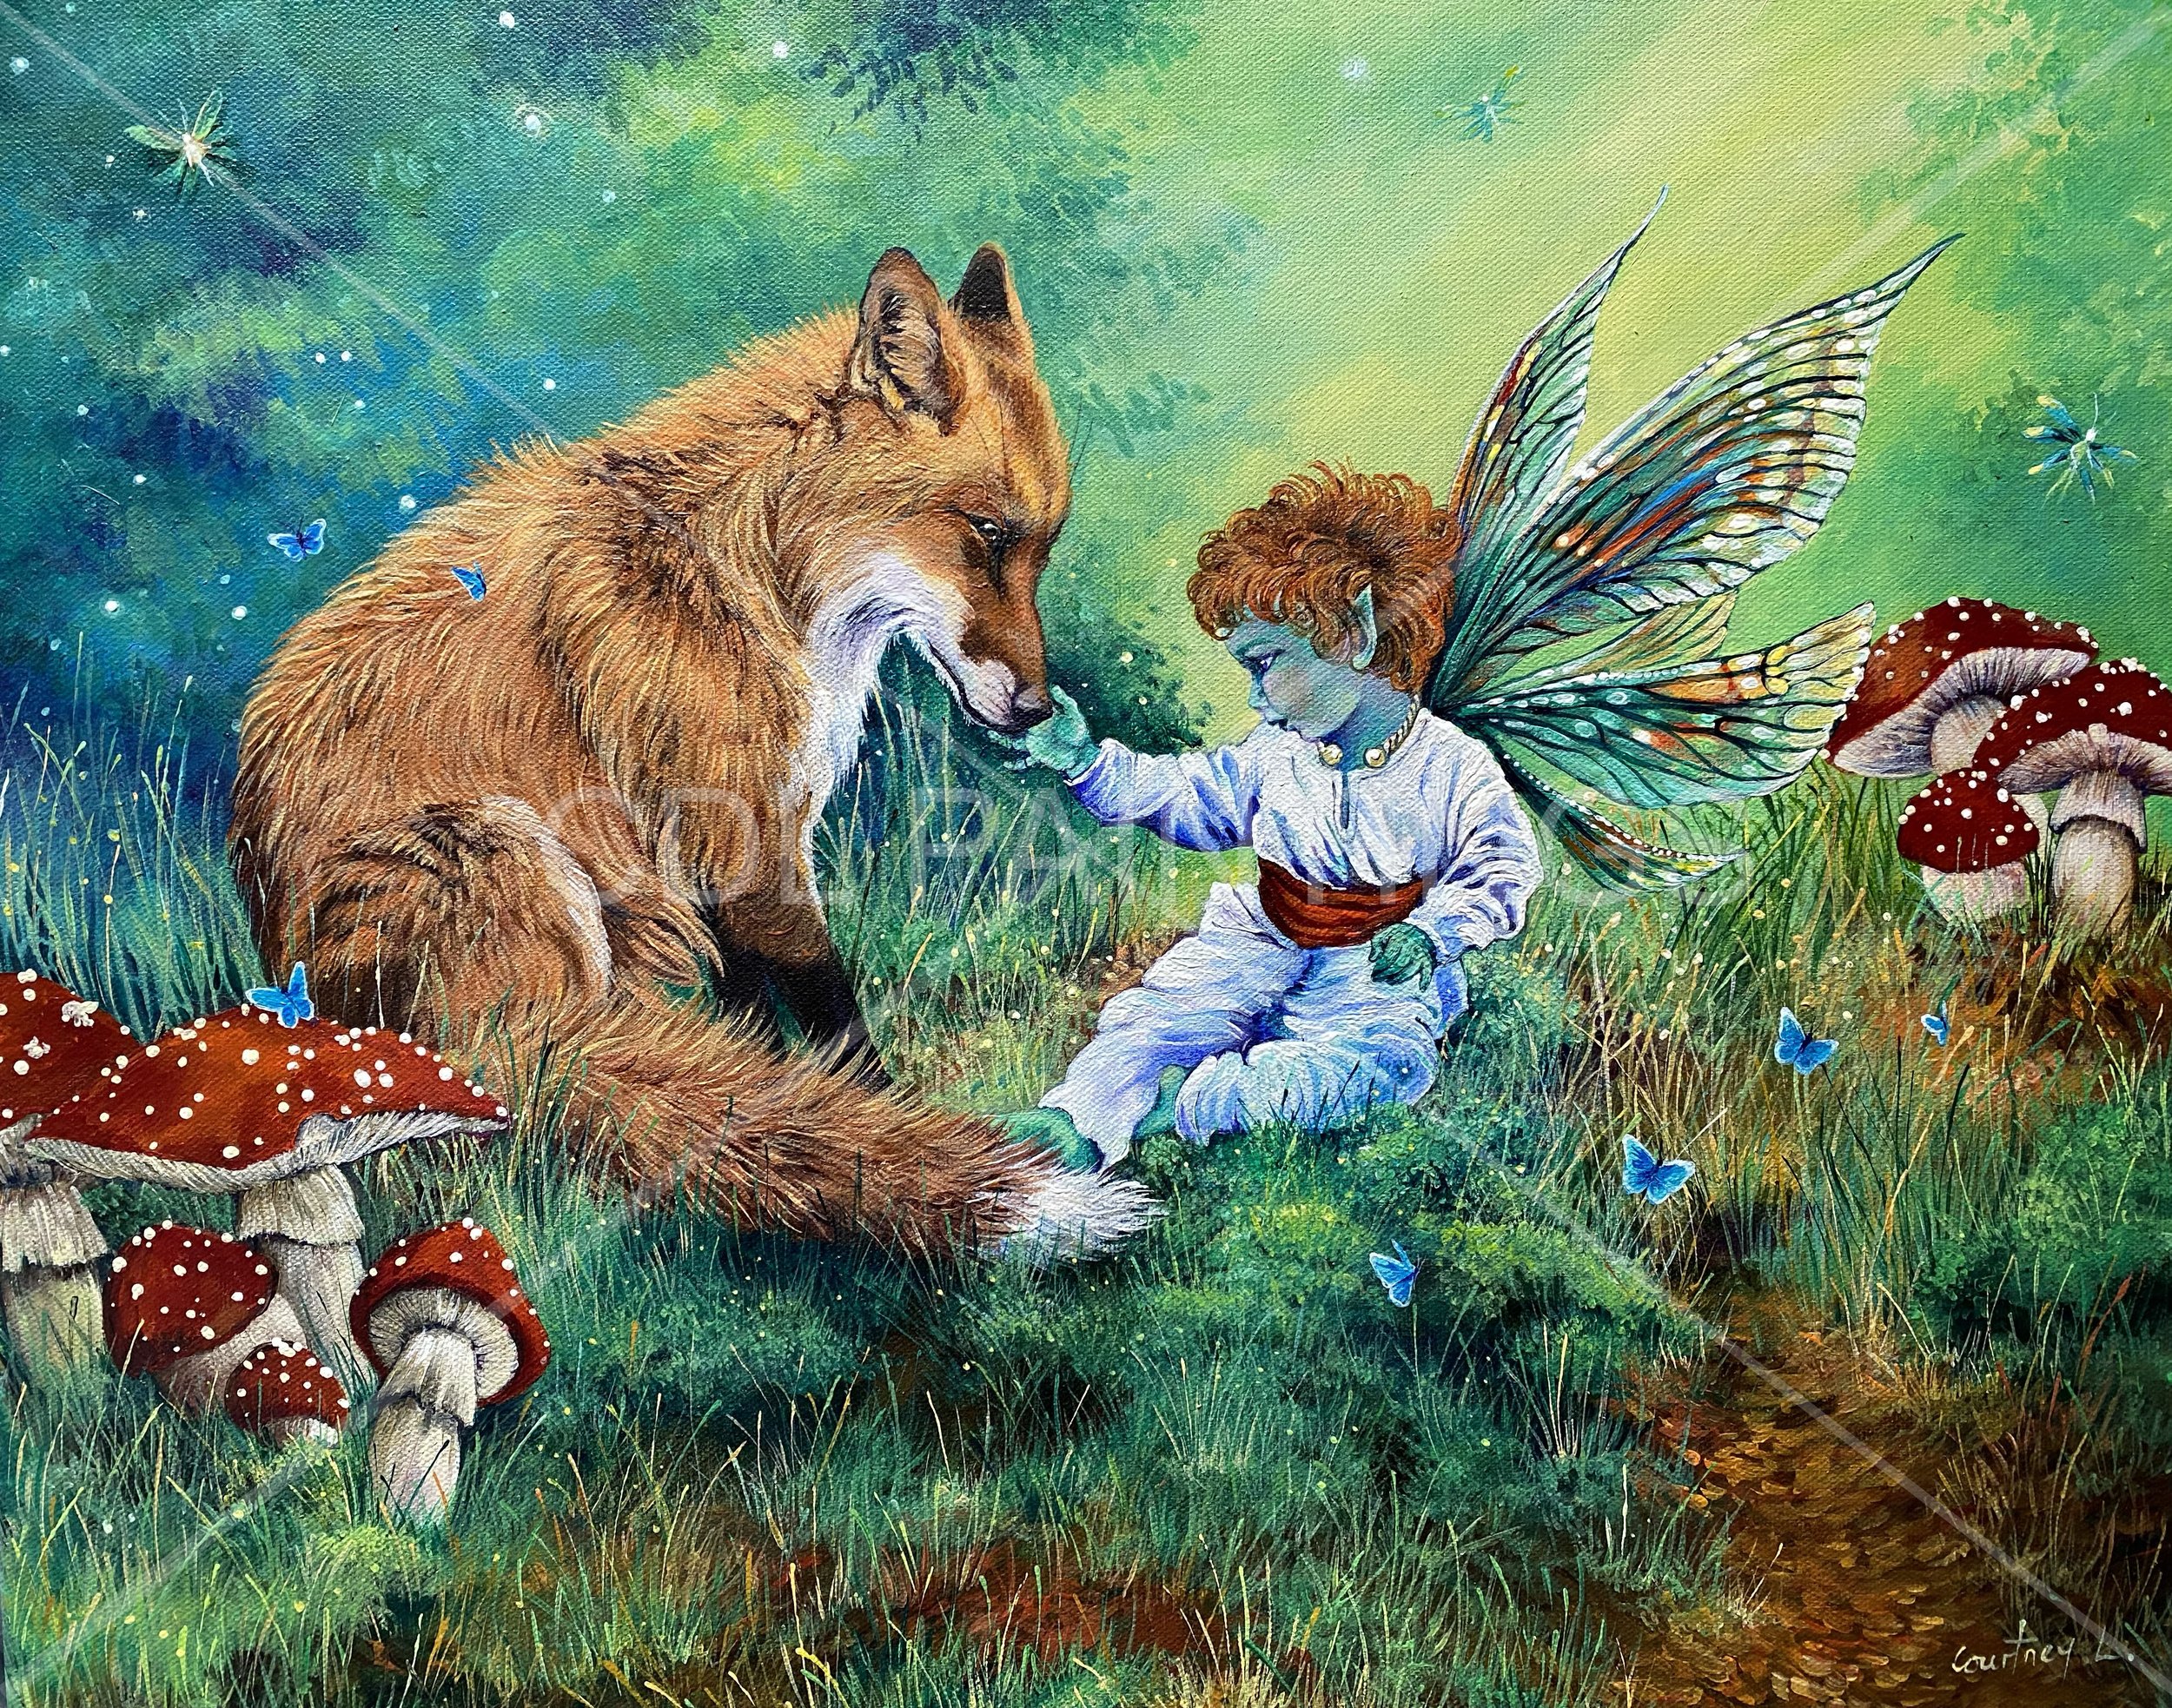 Fairy Child & Fox.jpg